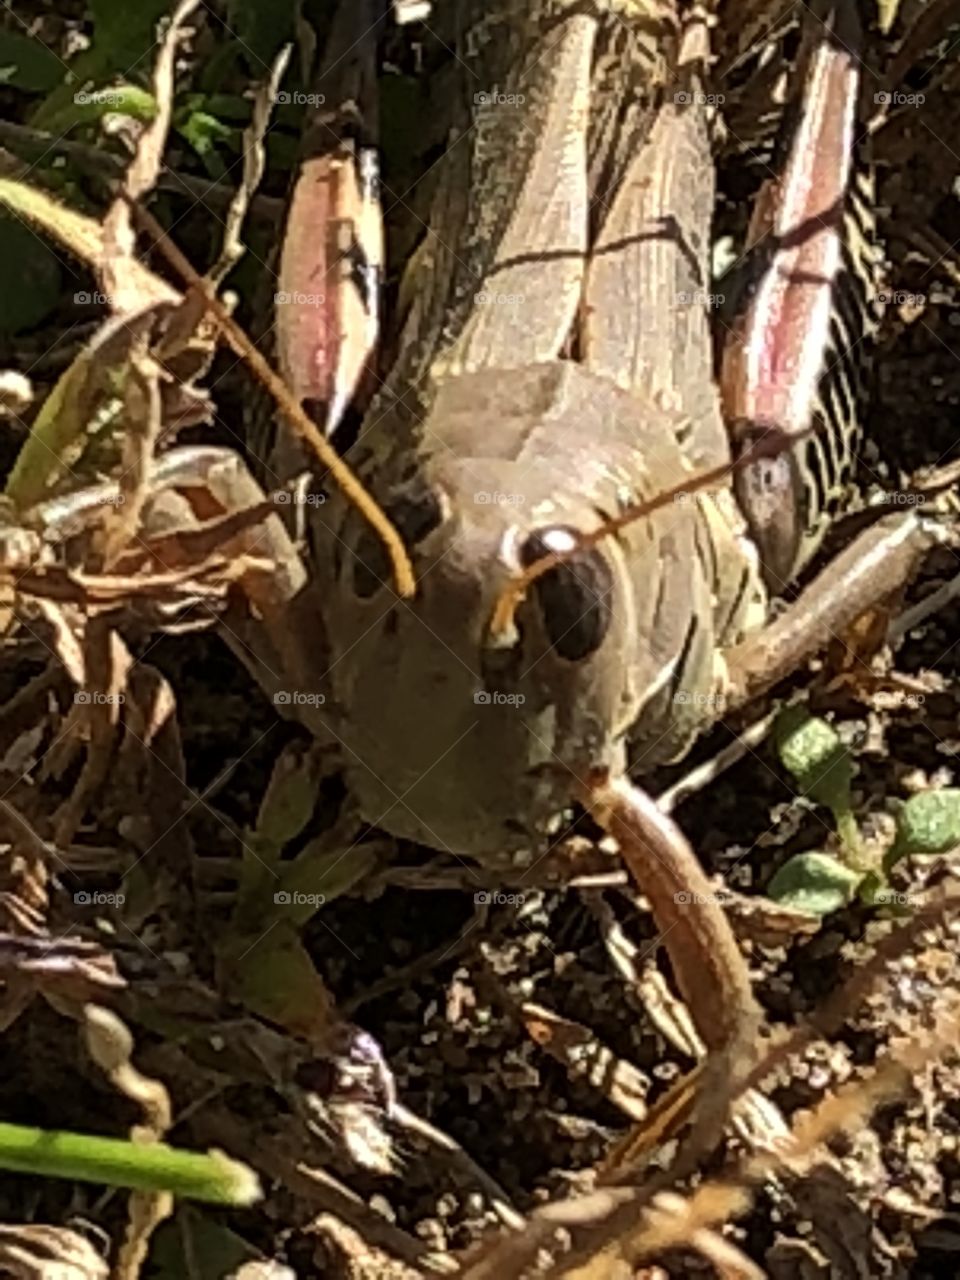 Cool up close grasshopper